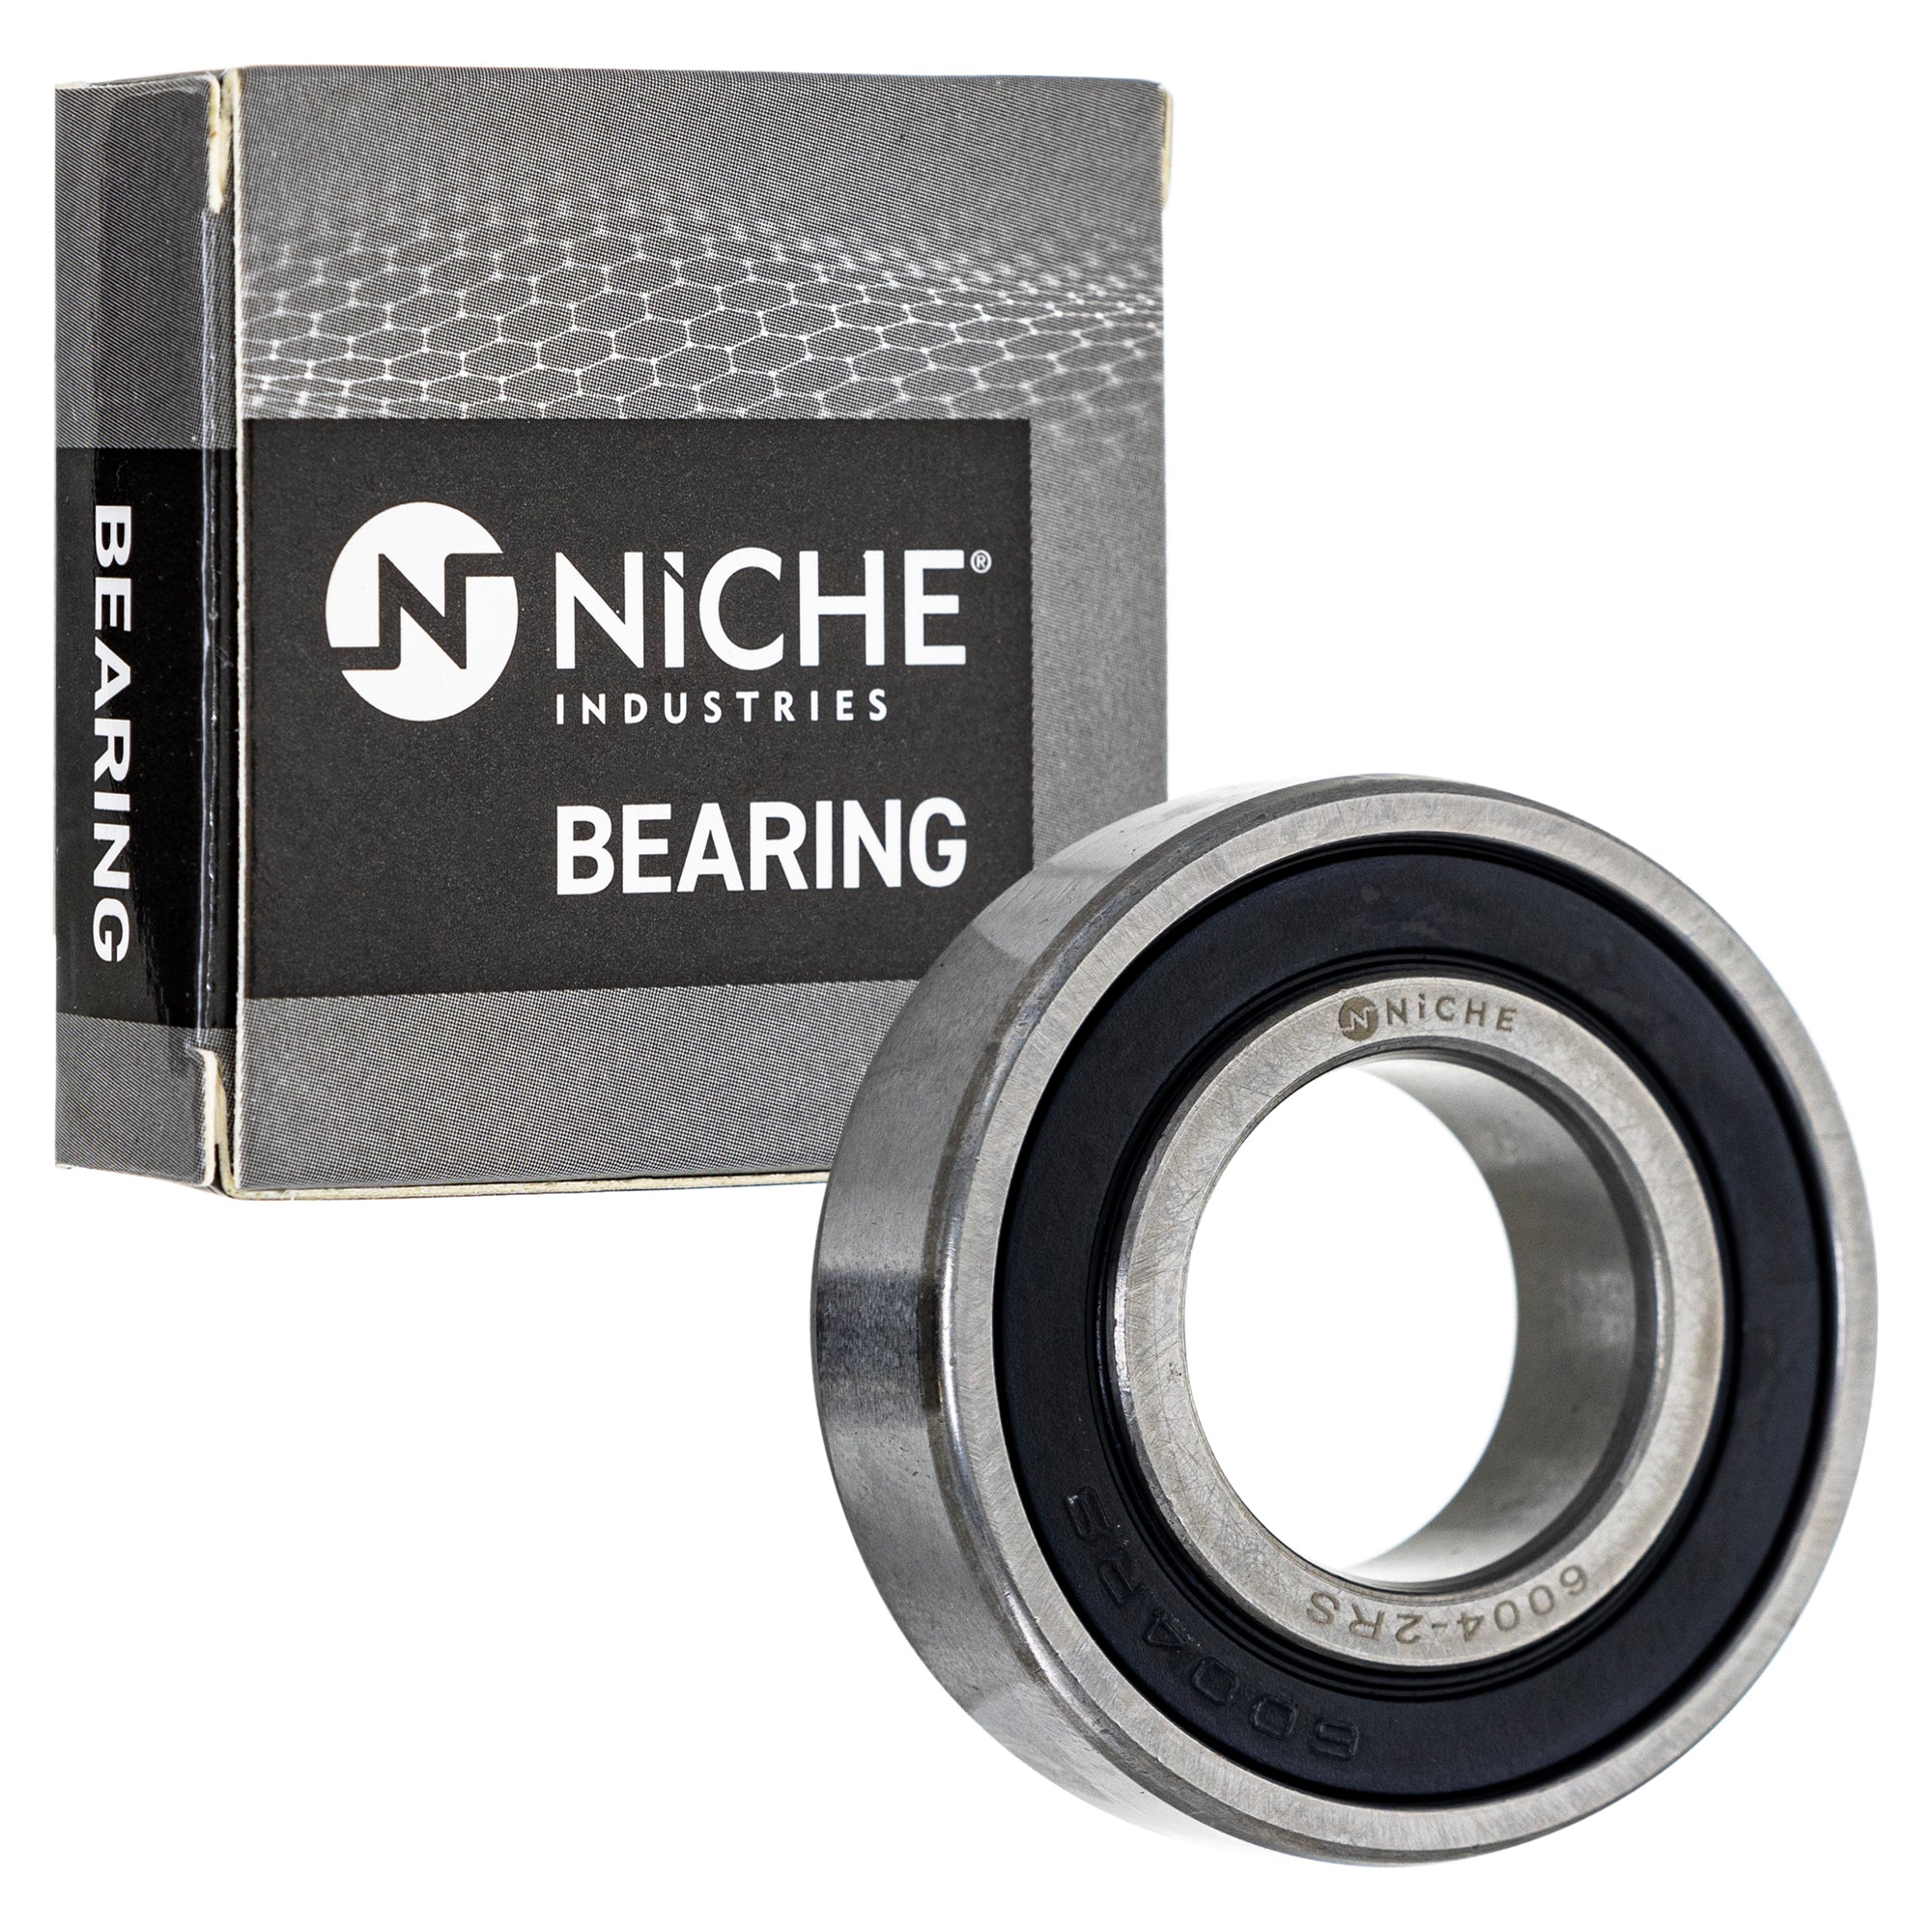 NICHE MK1008778 Wheel Bearing Kit for zOTHER Ref No KL650